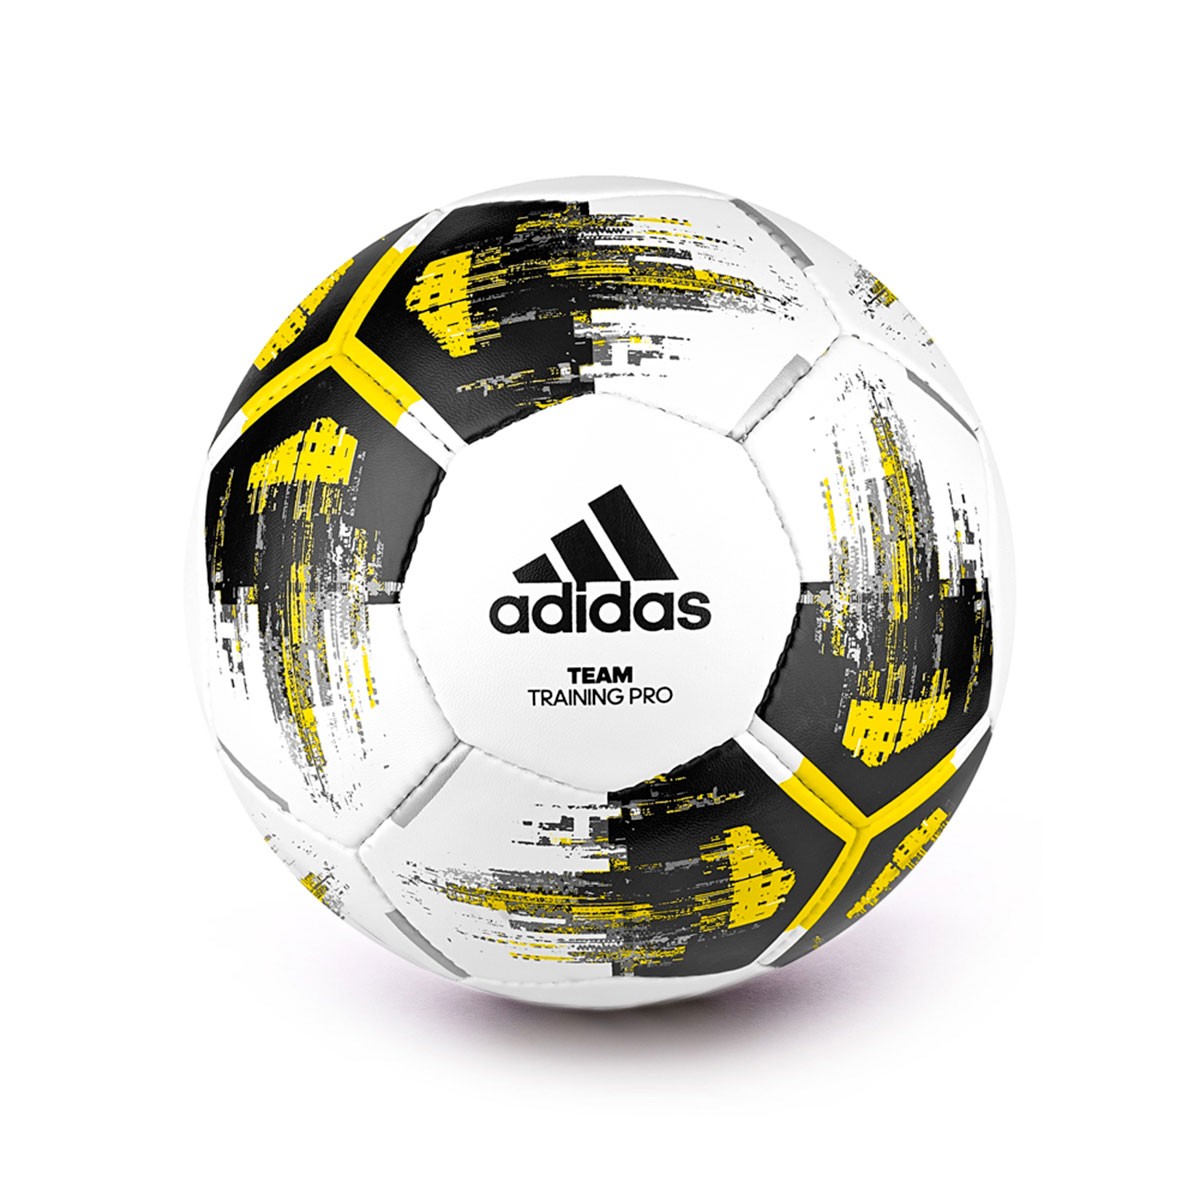 adidas training soccer ball